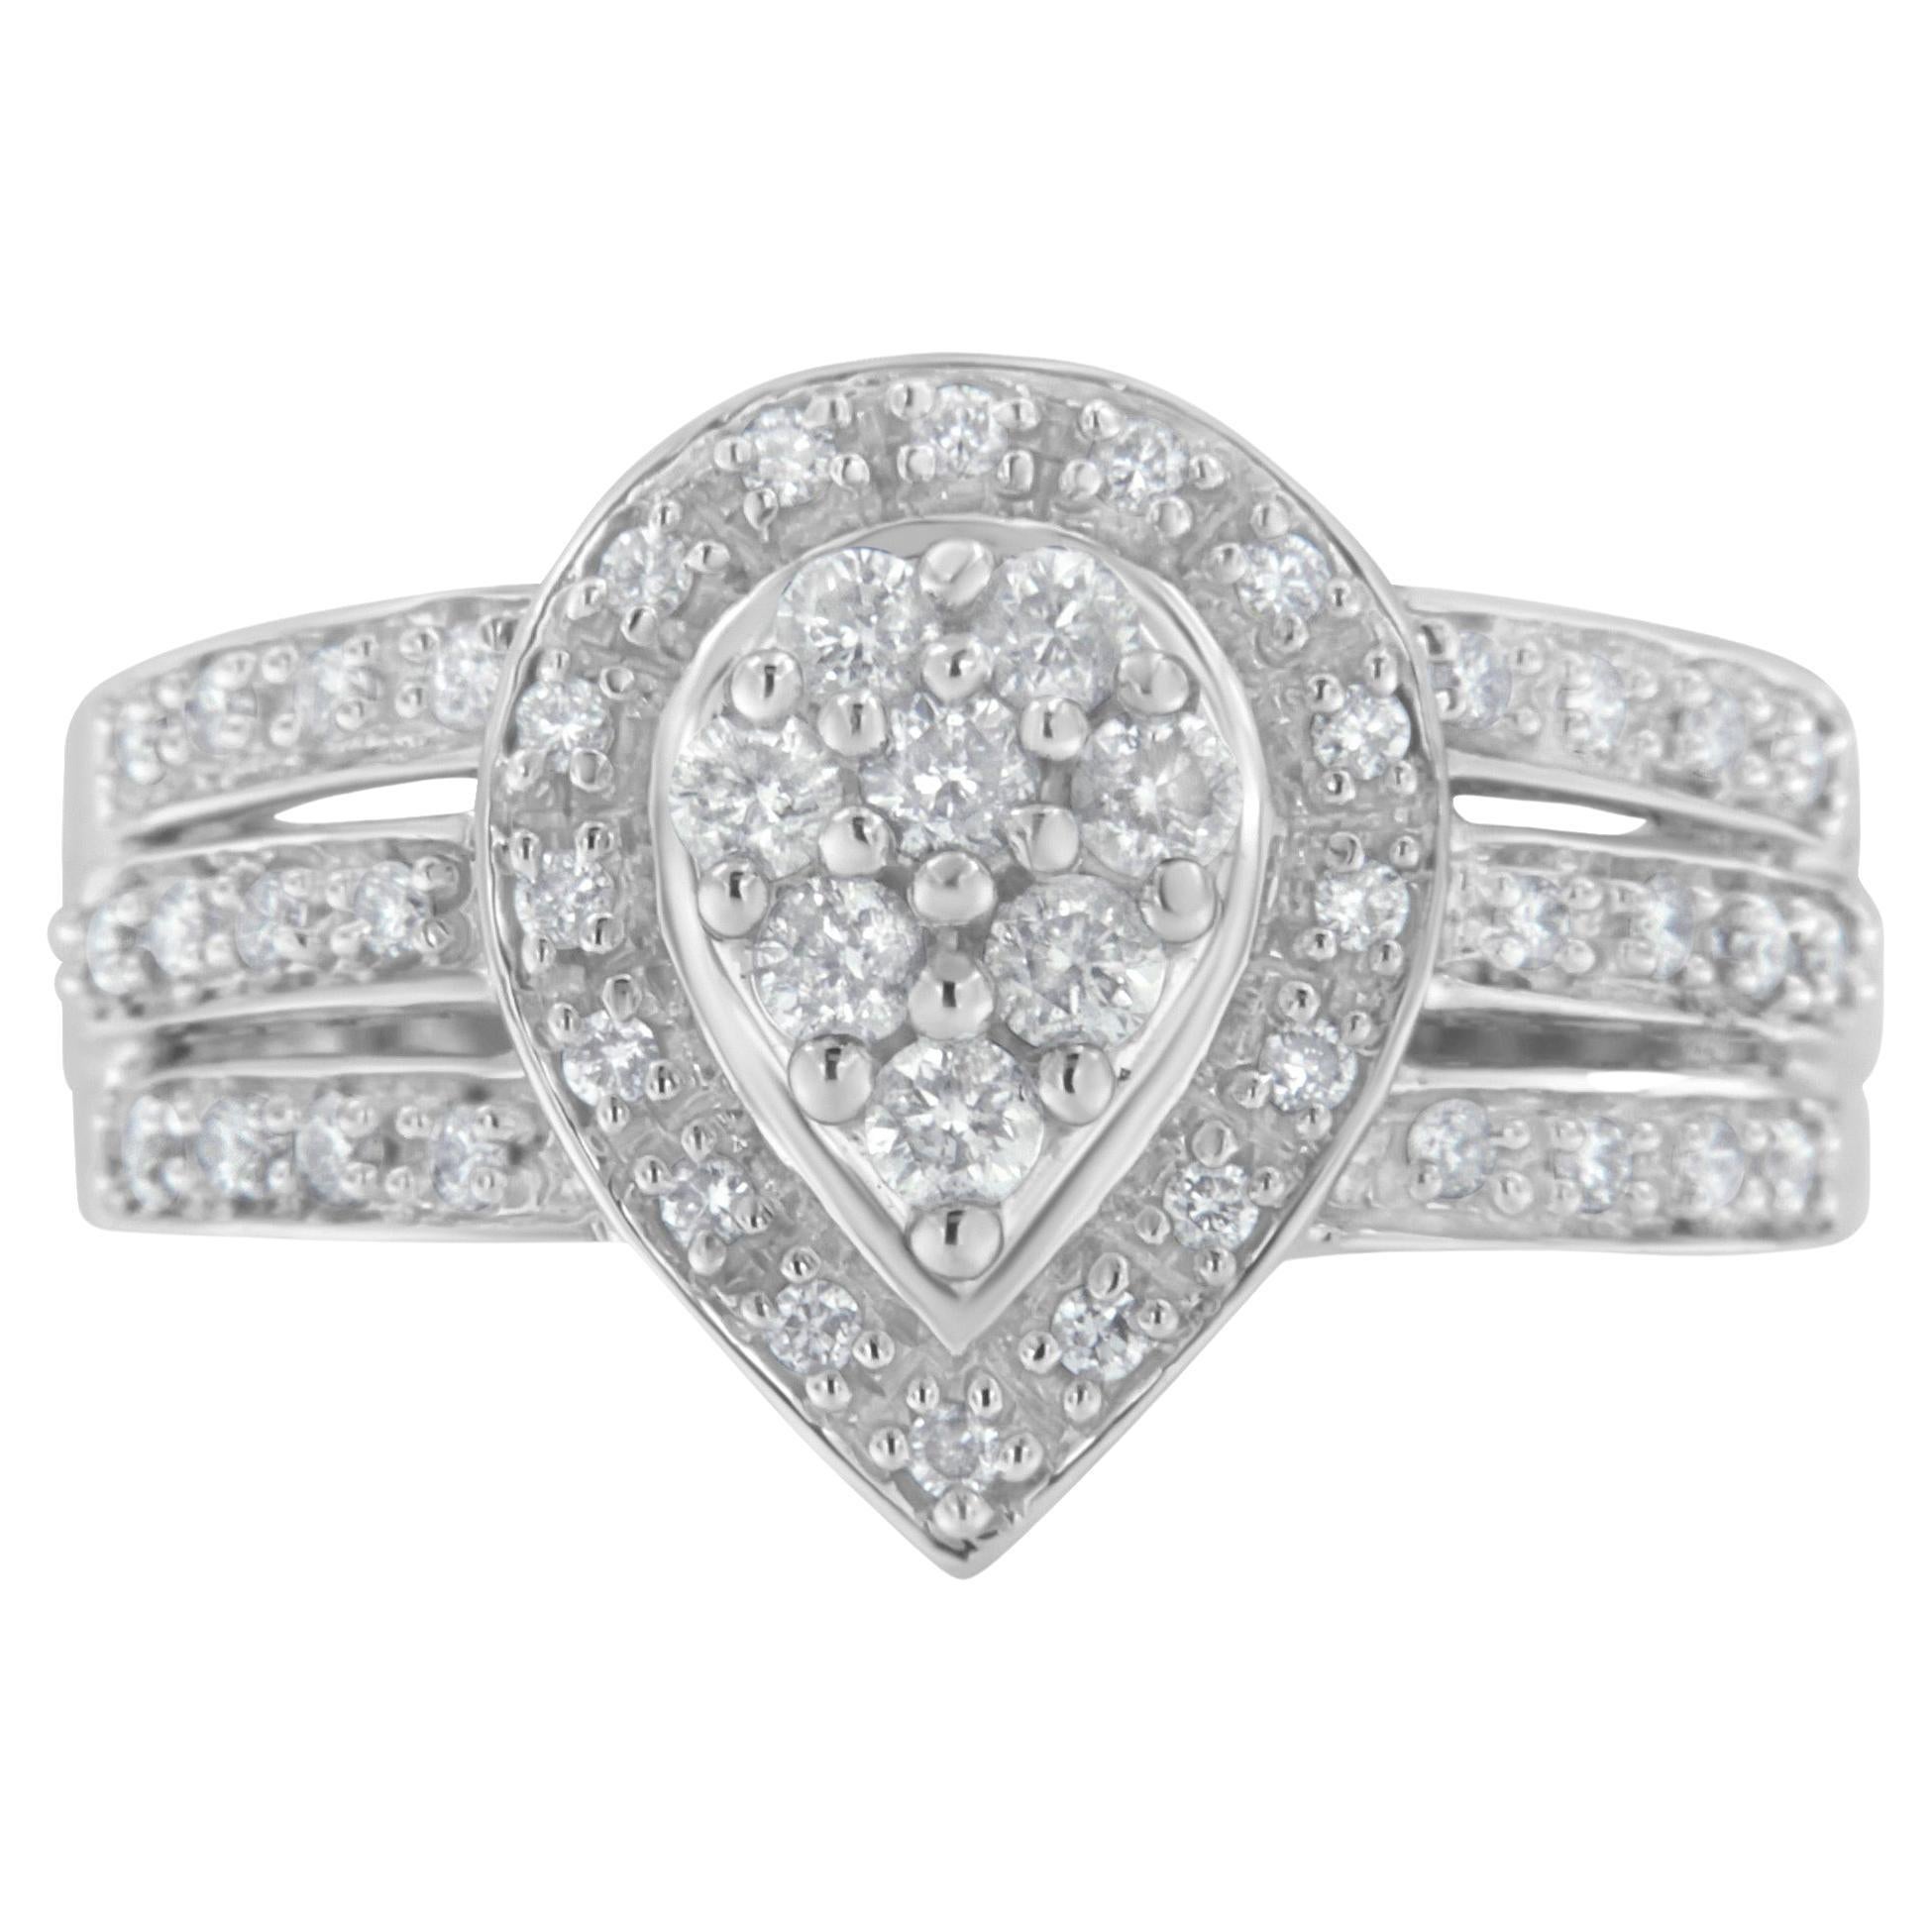 For Sale:  10K White Gold 1/2 Carat Round Cut Diamond Teardrop Ring